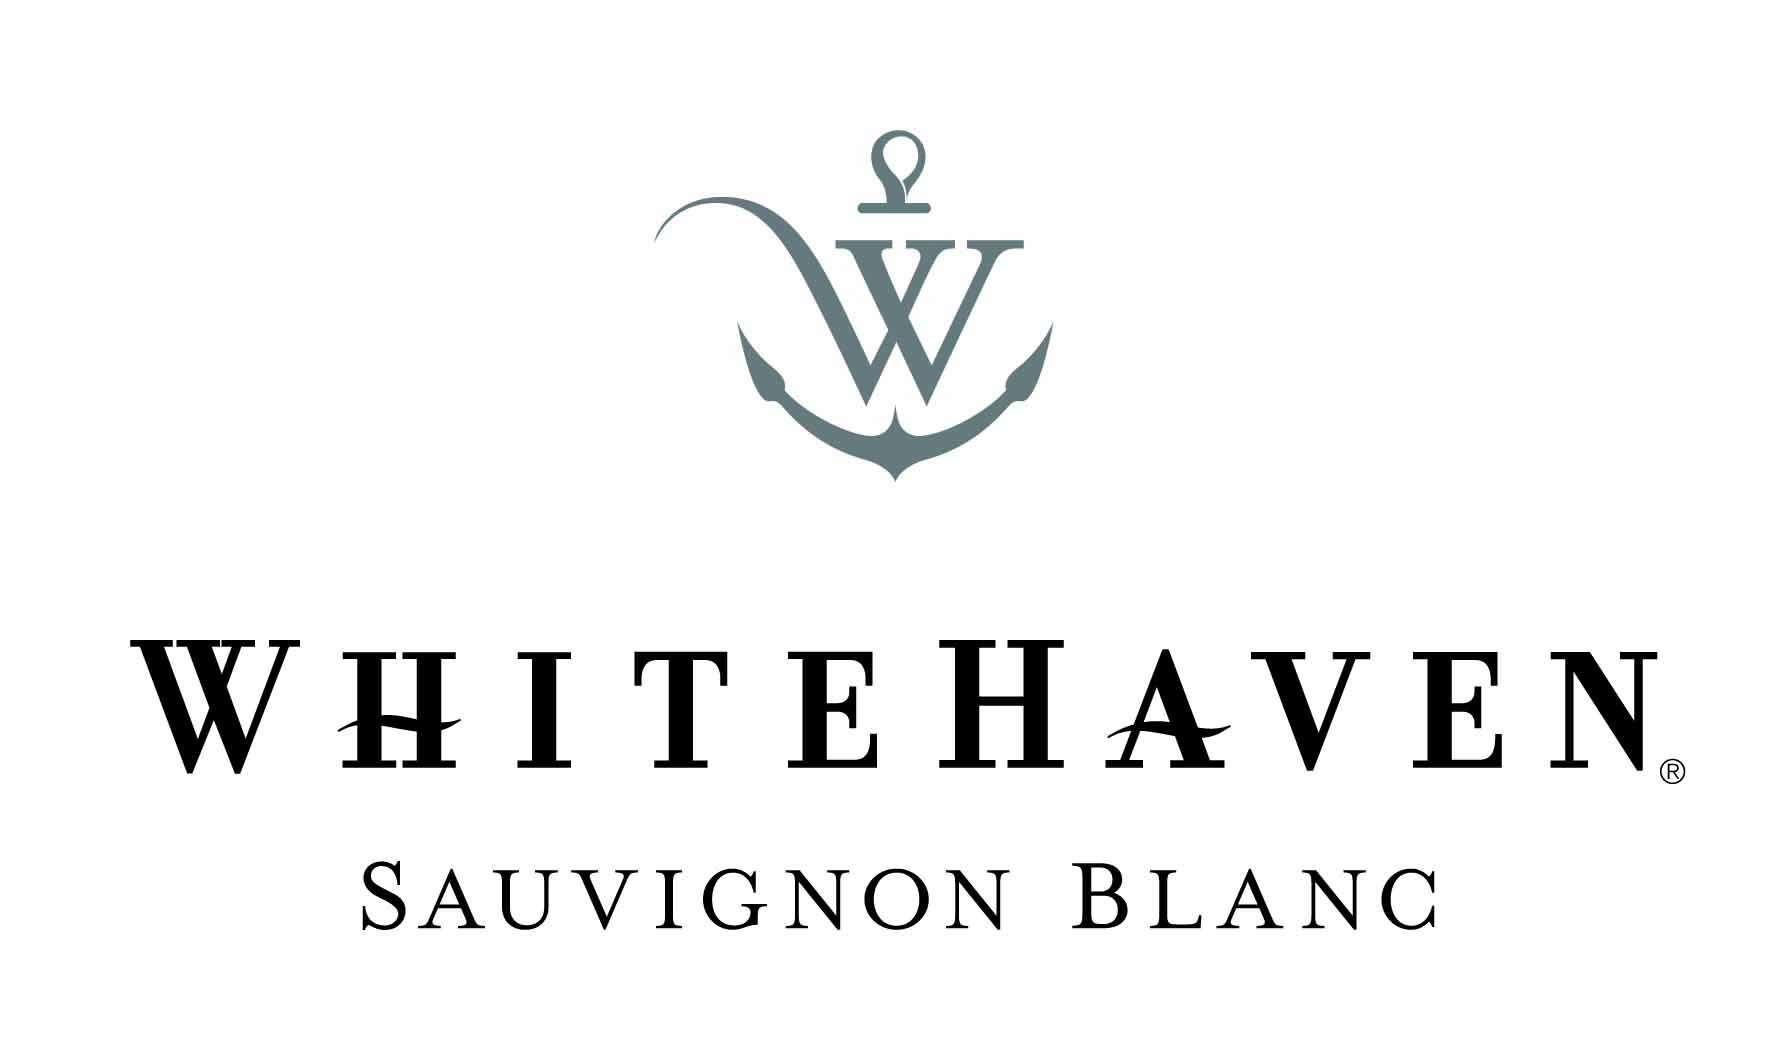 Whitehaven logo